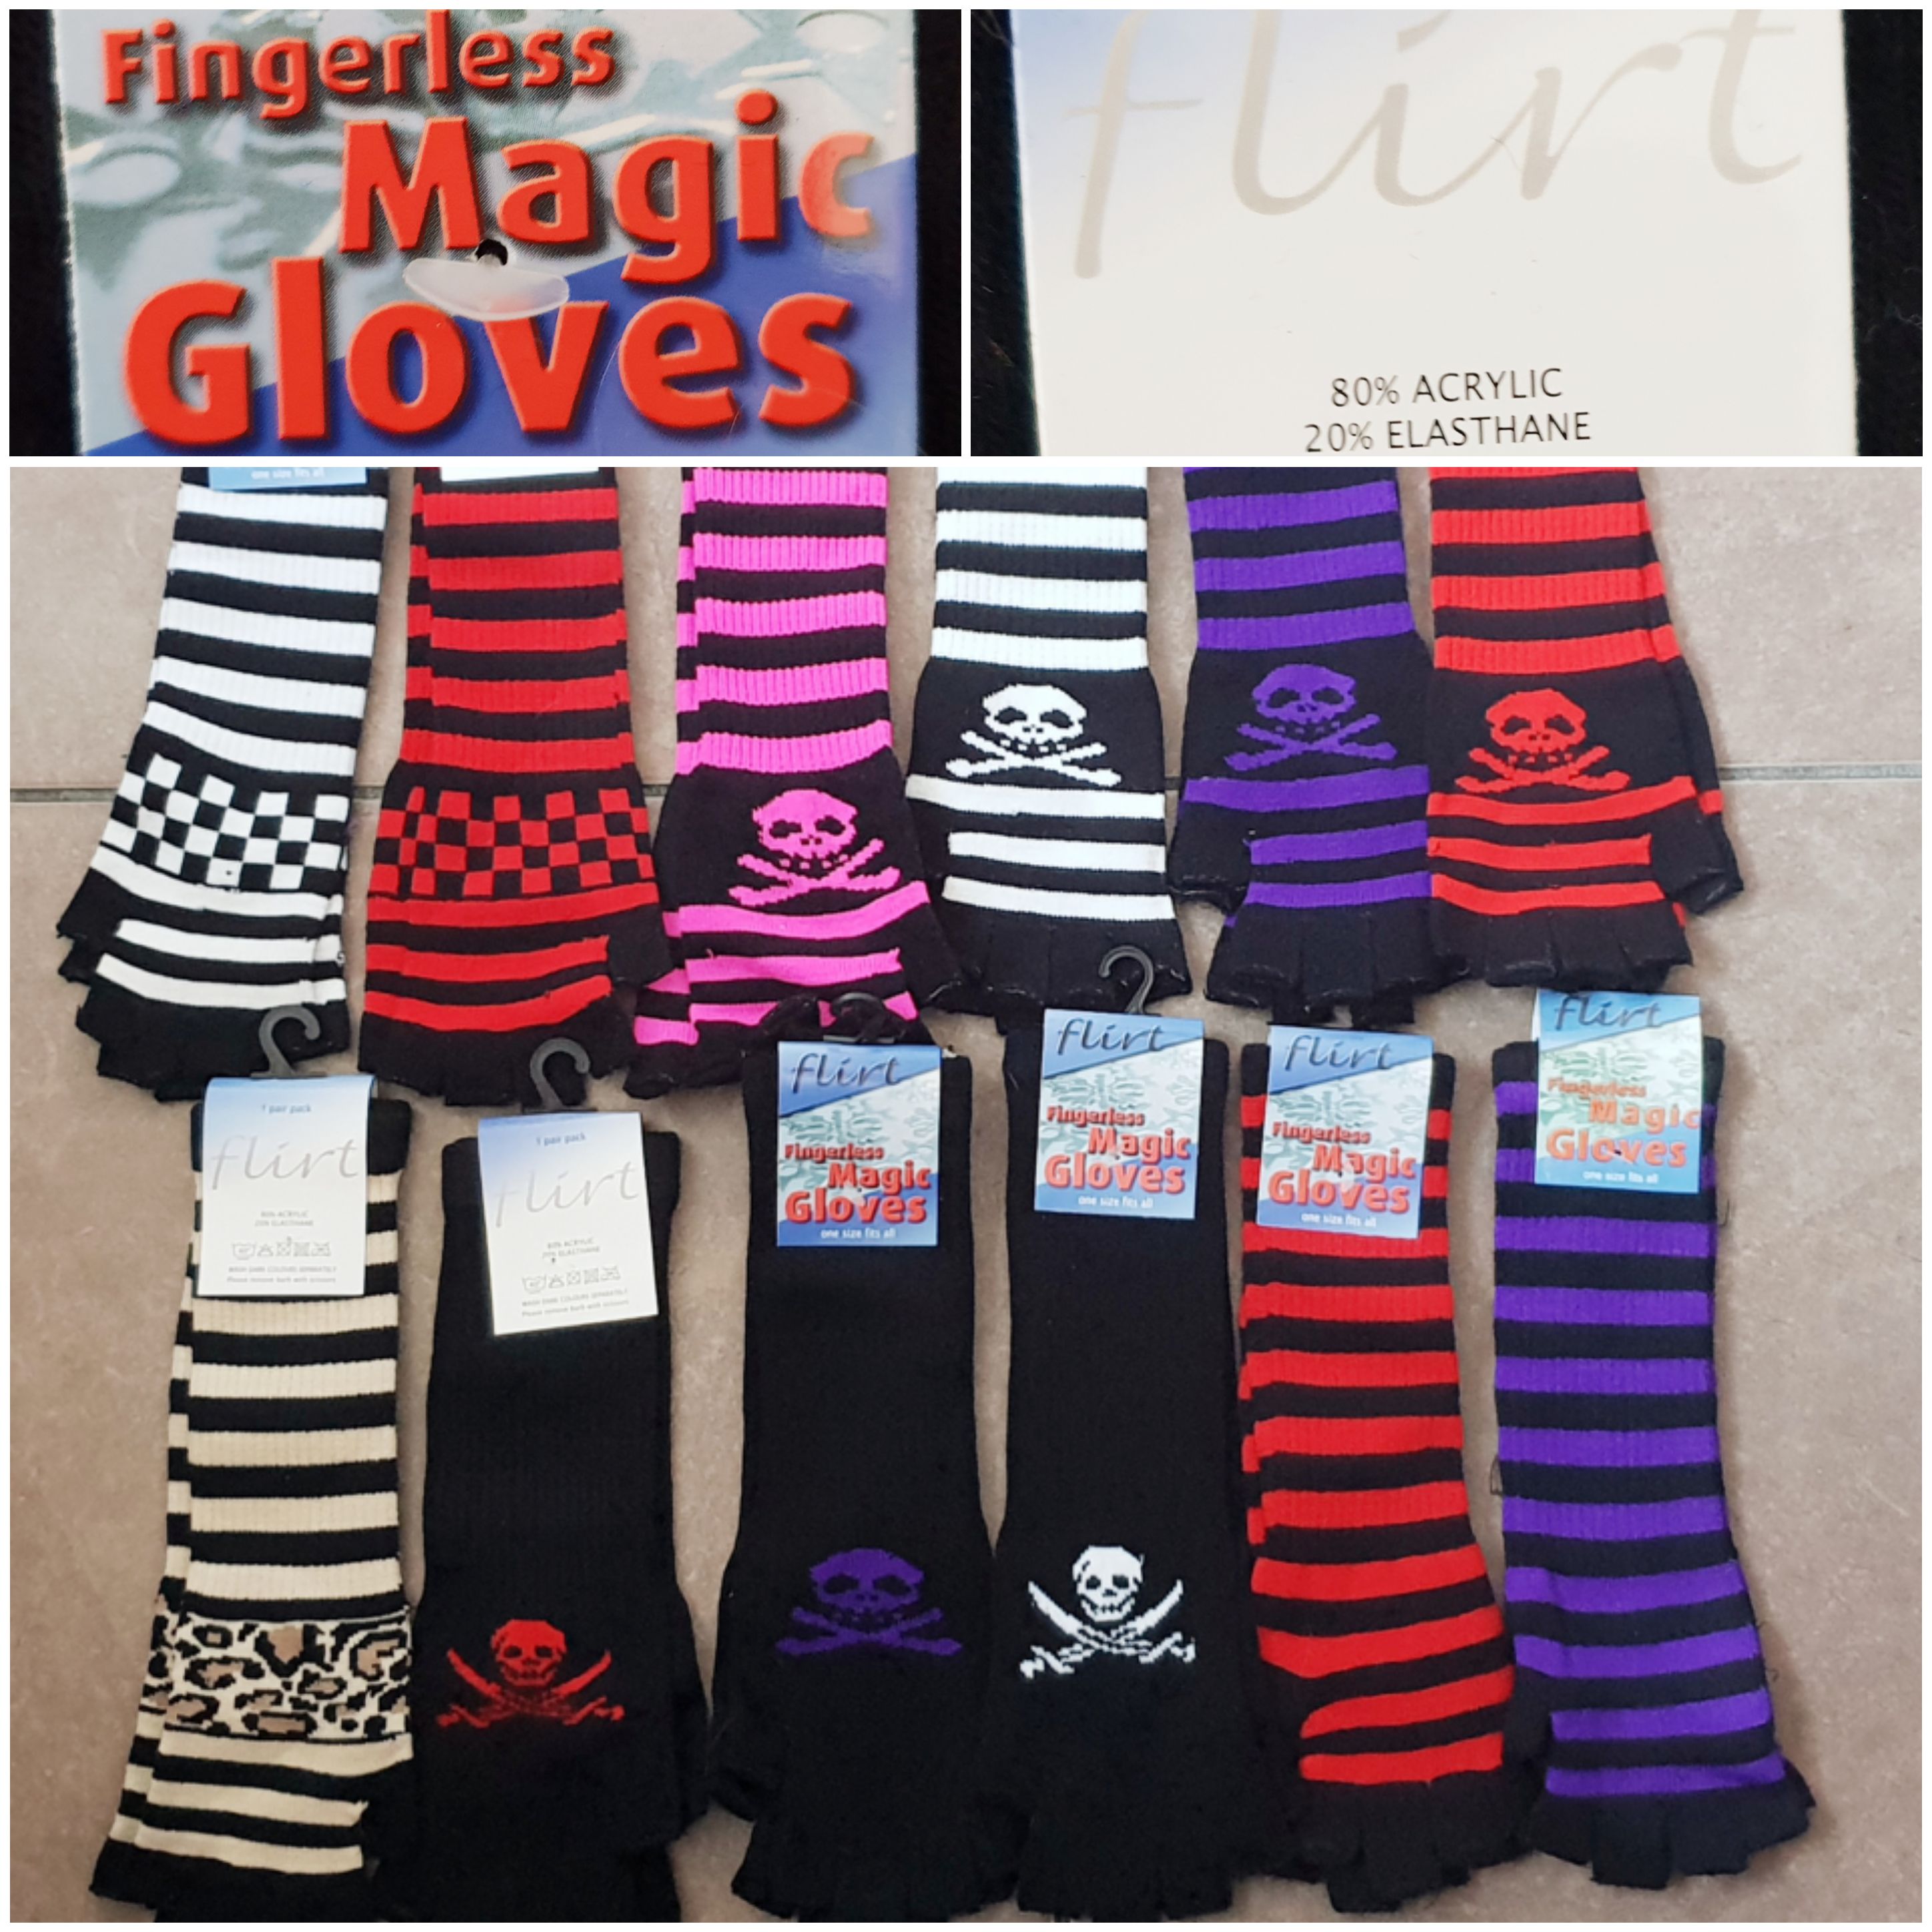 Flirt London 40 pairs Long Fingerless Magic Gloves various designs